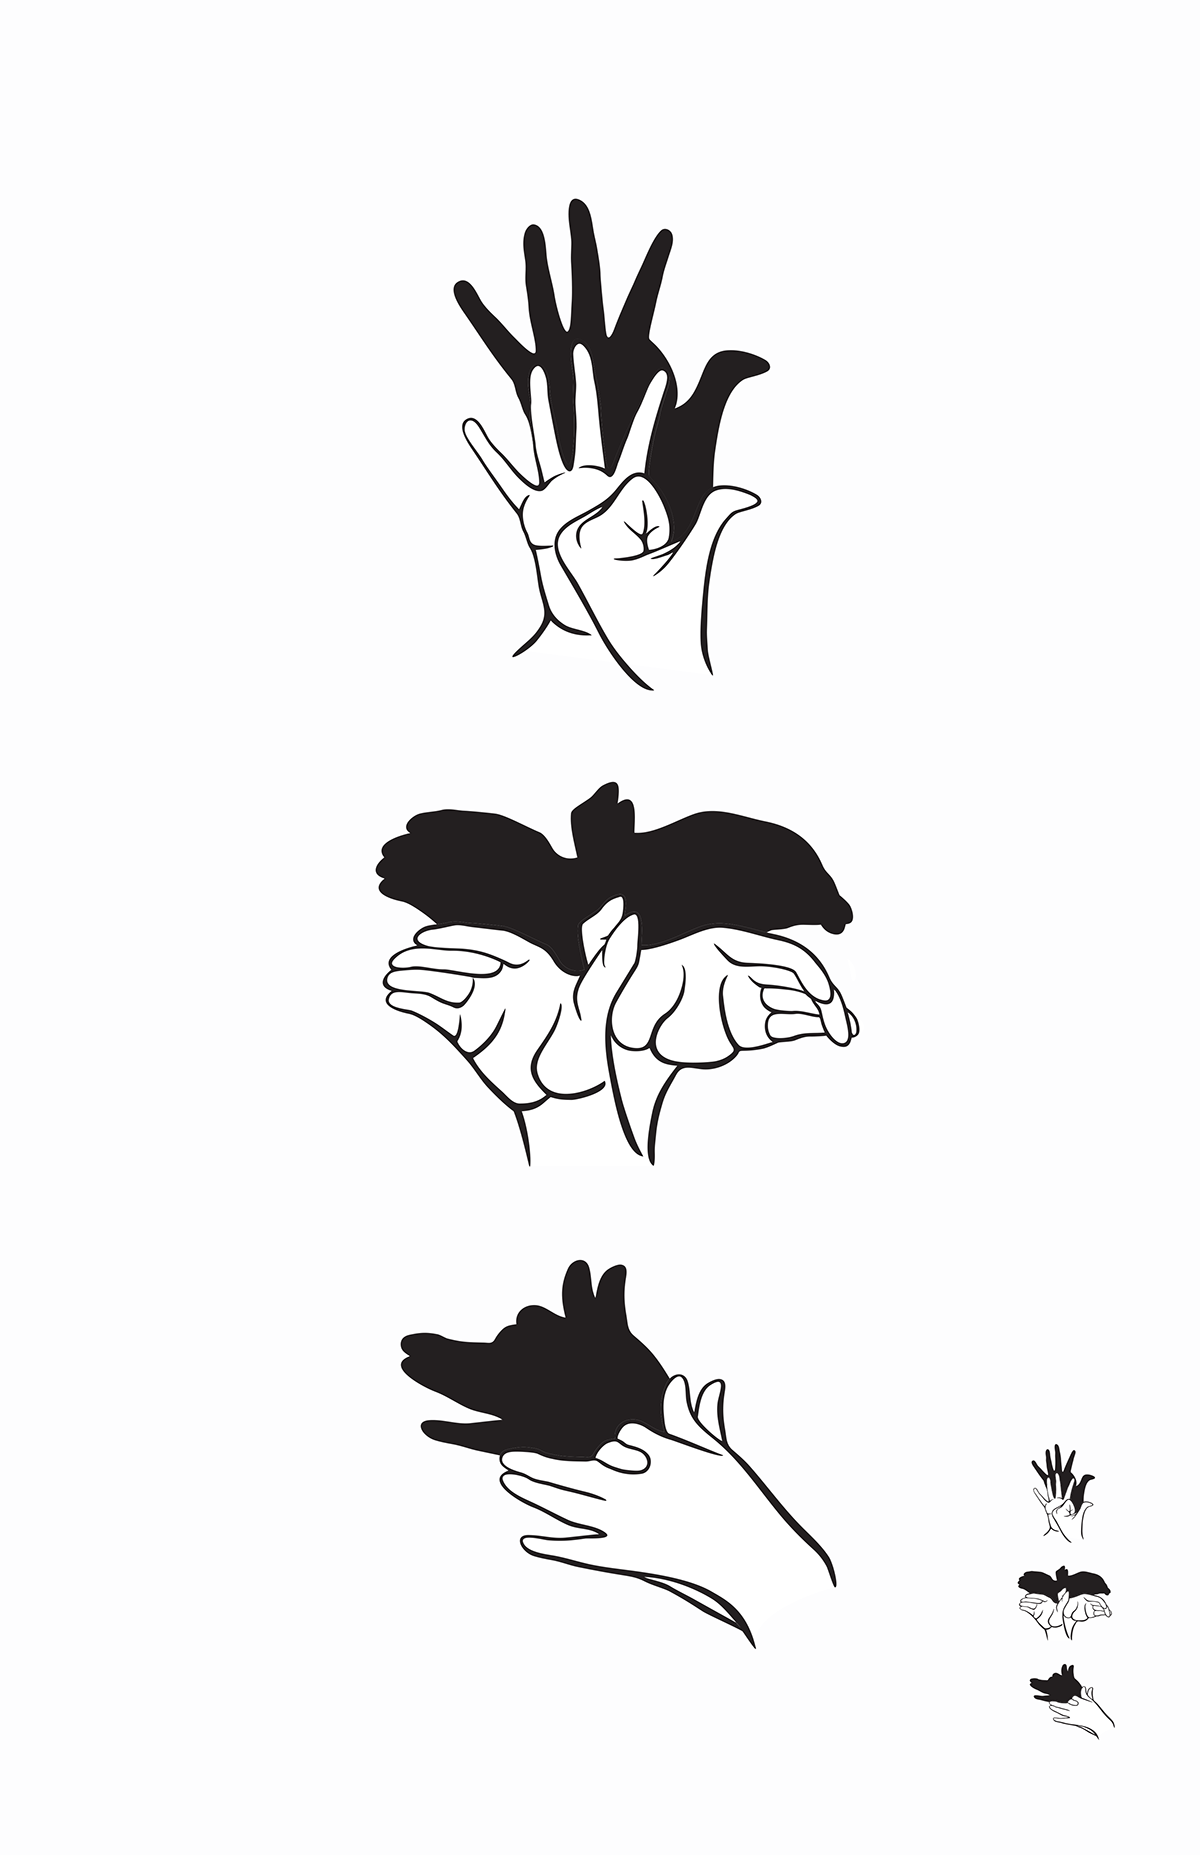 shadow puppets hand symbols symbols hands